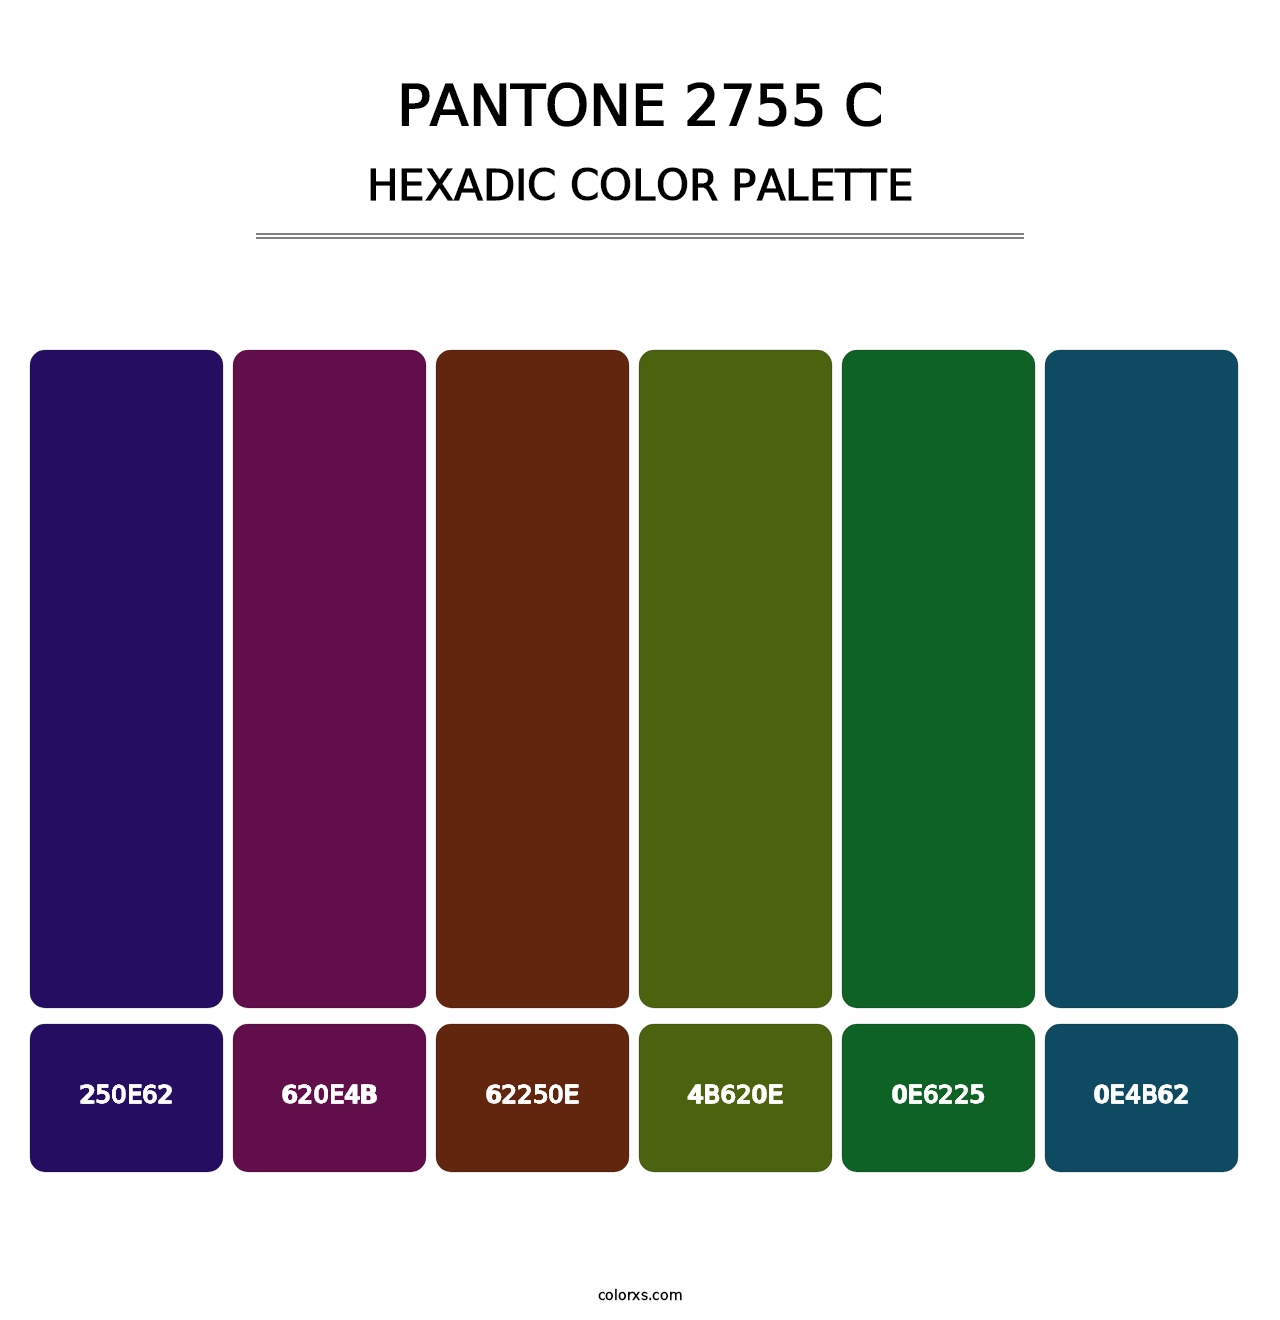 PANTONE 2755 C - Hexadic Color Palette